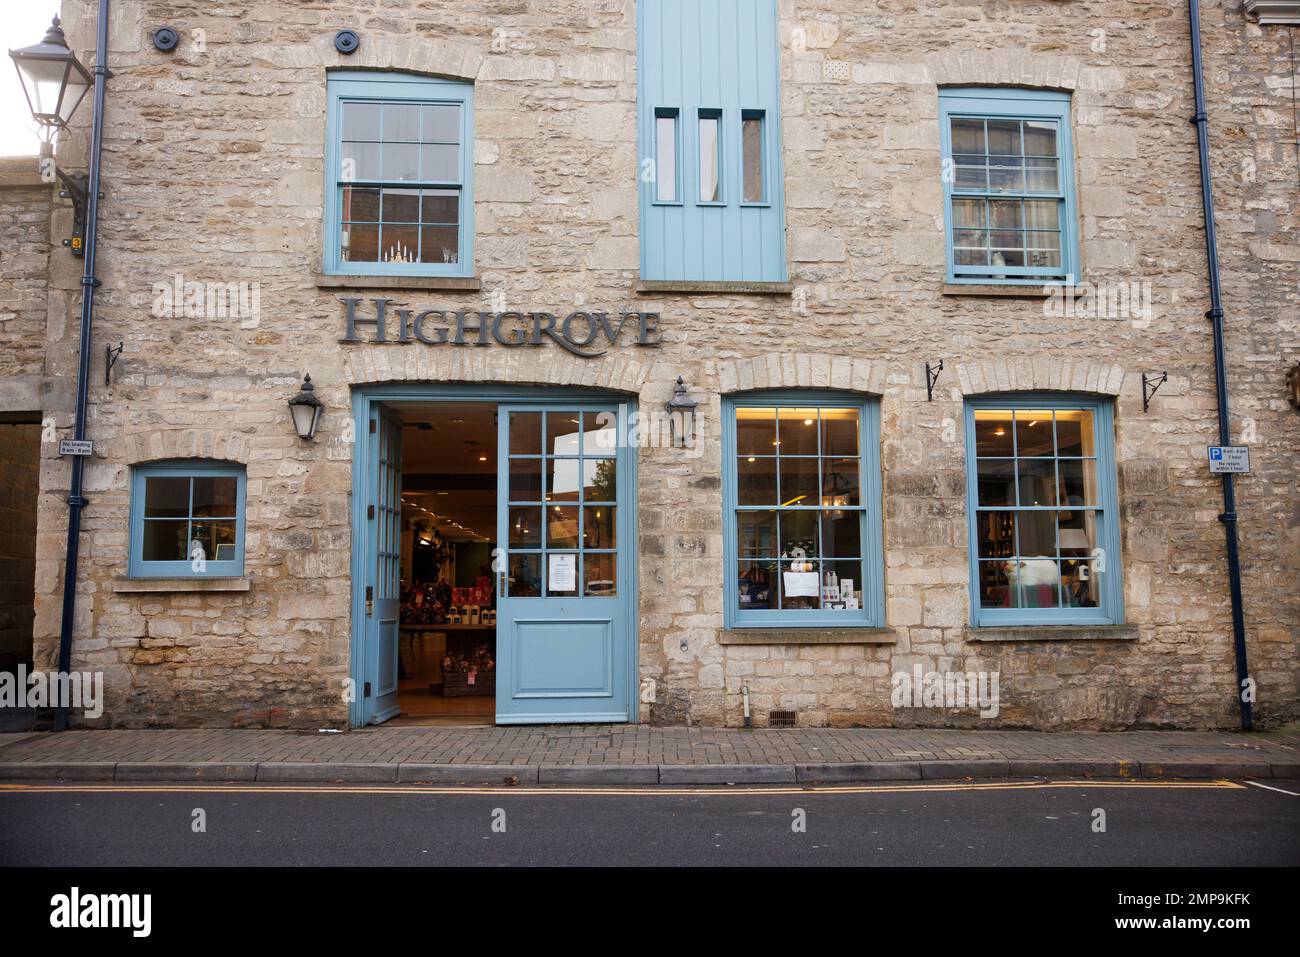 Highgrove shop, Tetbury, The Cotswolds, Gloucestershire. Stock Photo